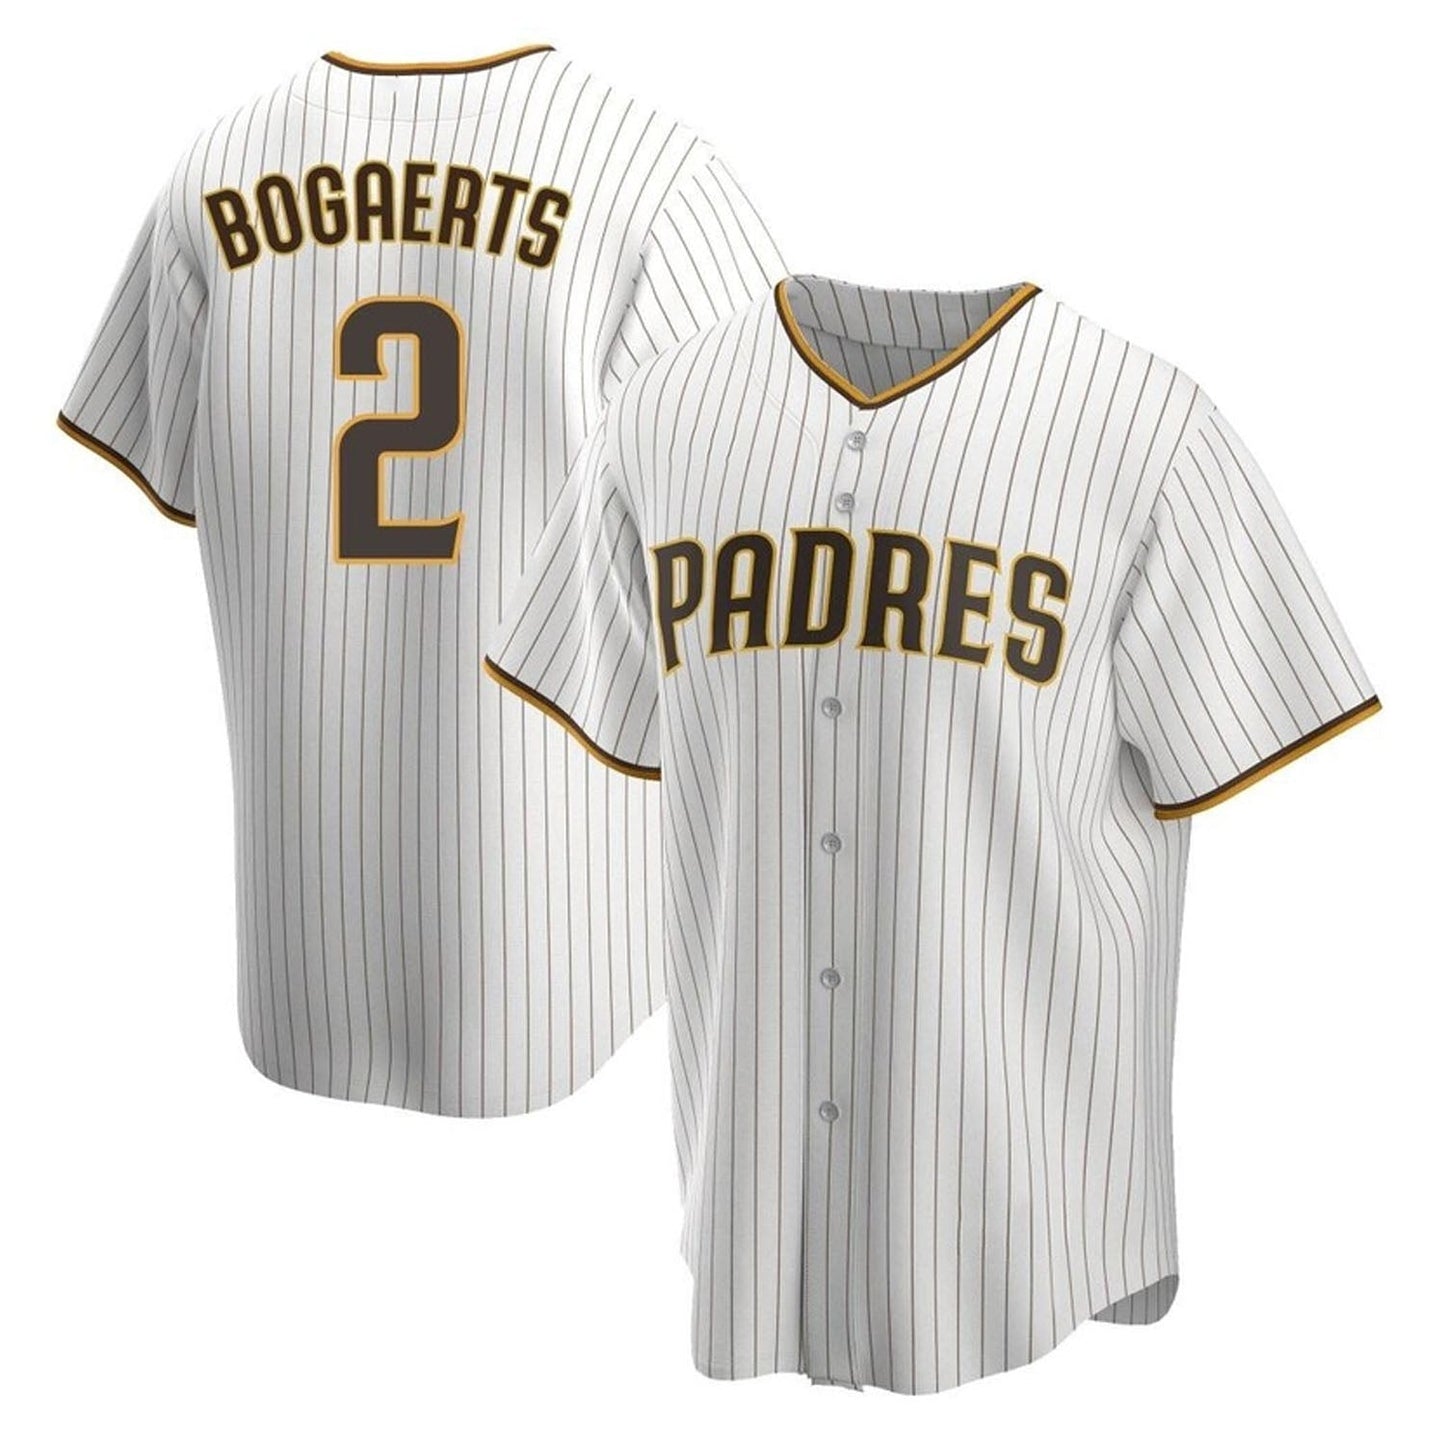 MLB Xander Bogaerts San Diego Padres 2 Jersey